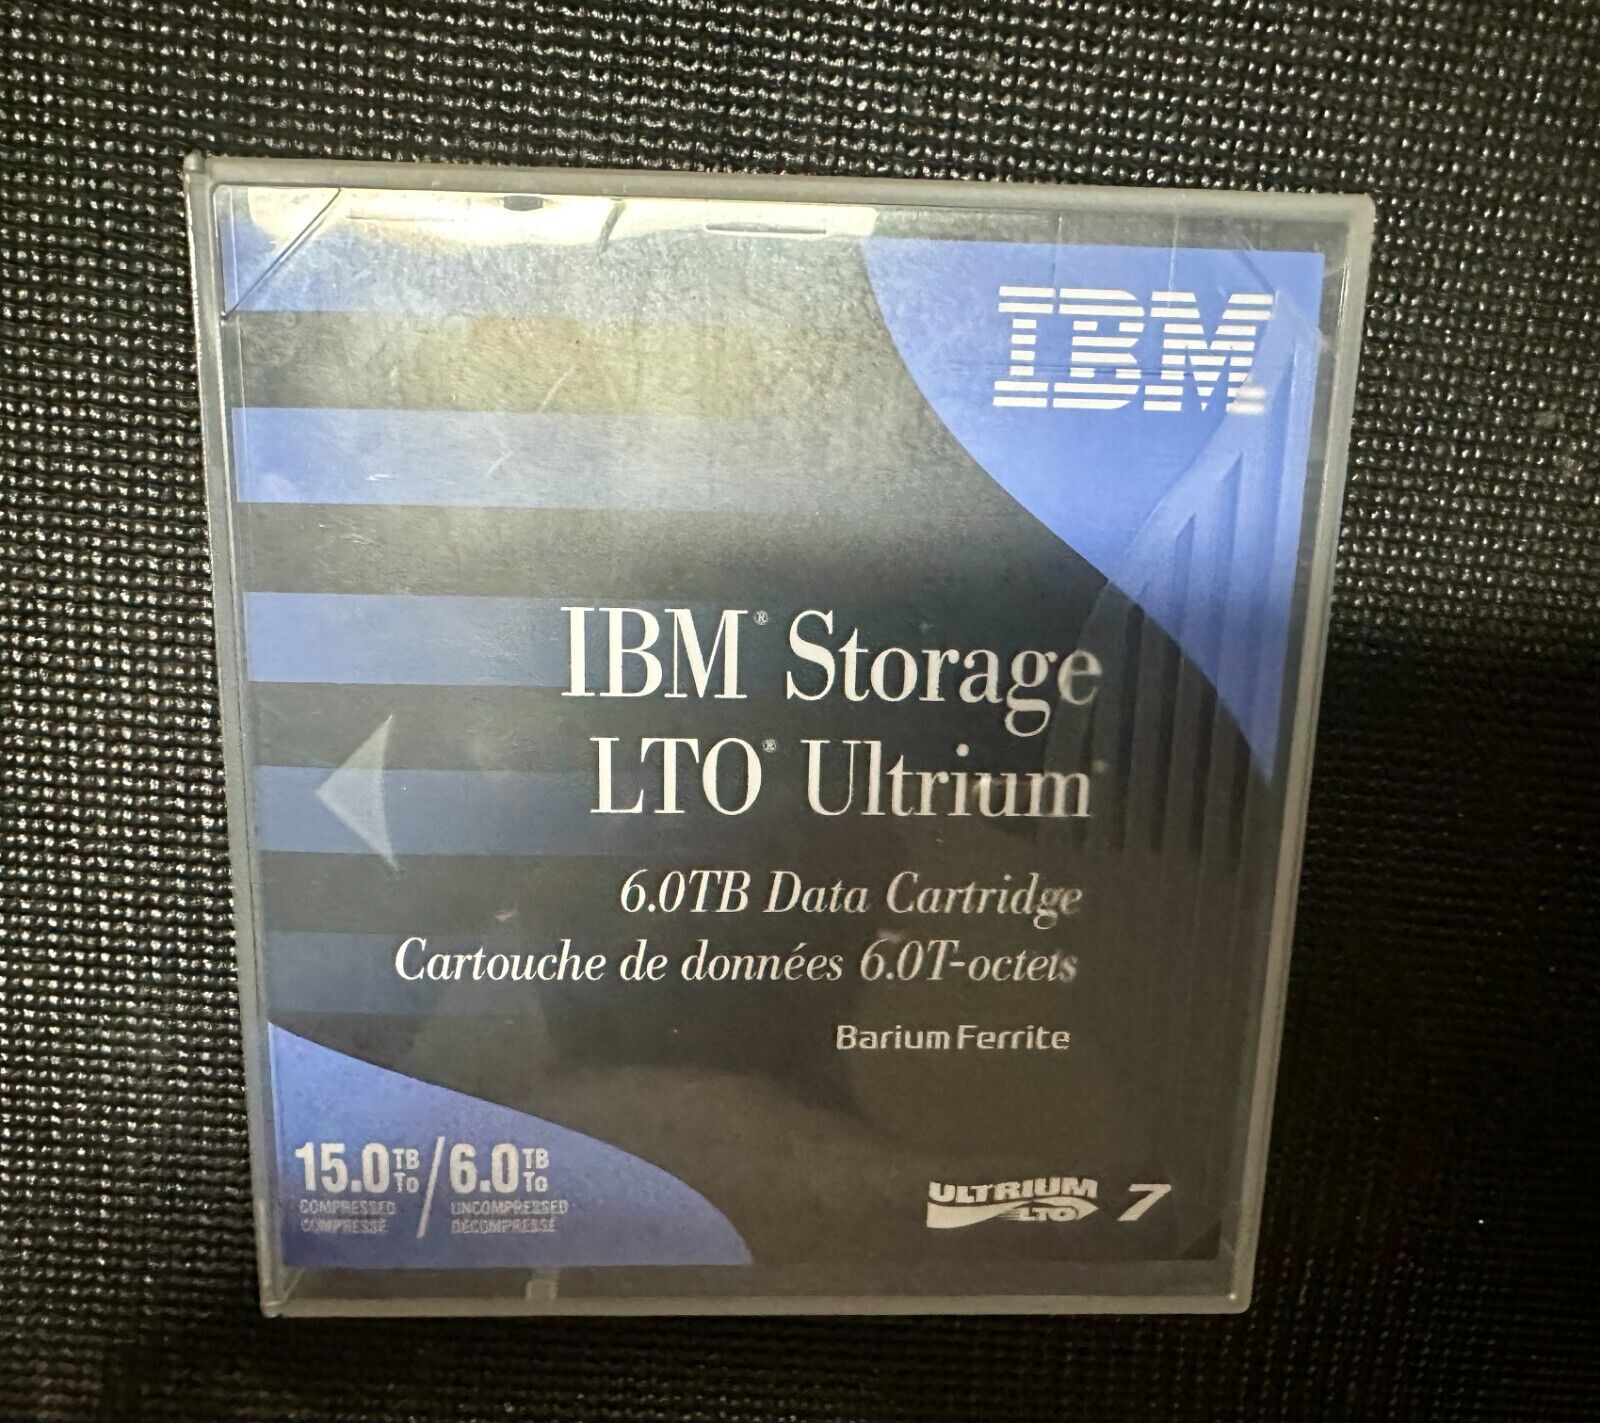 IBM LTO-7 ULTRIUM Tape Cartridge #38L7302 Data Storage - Brand New